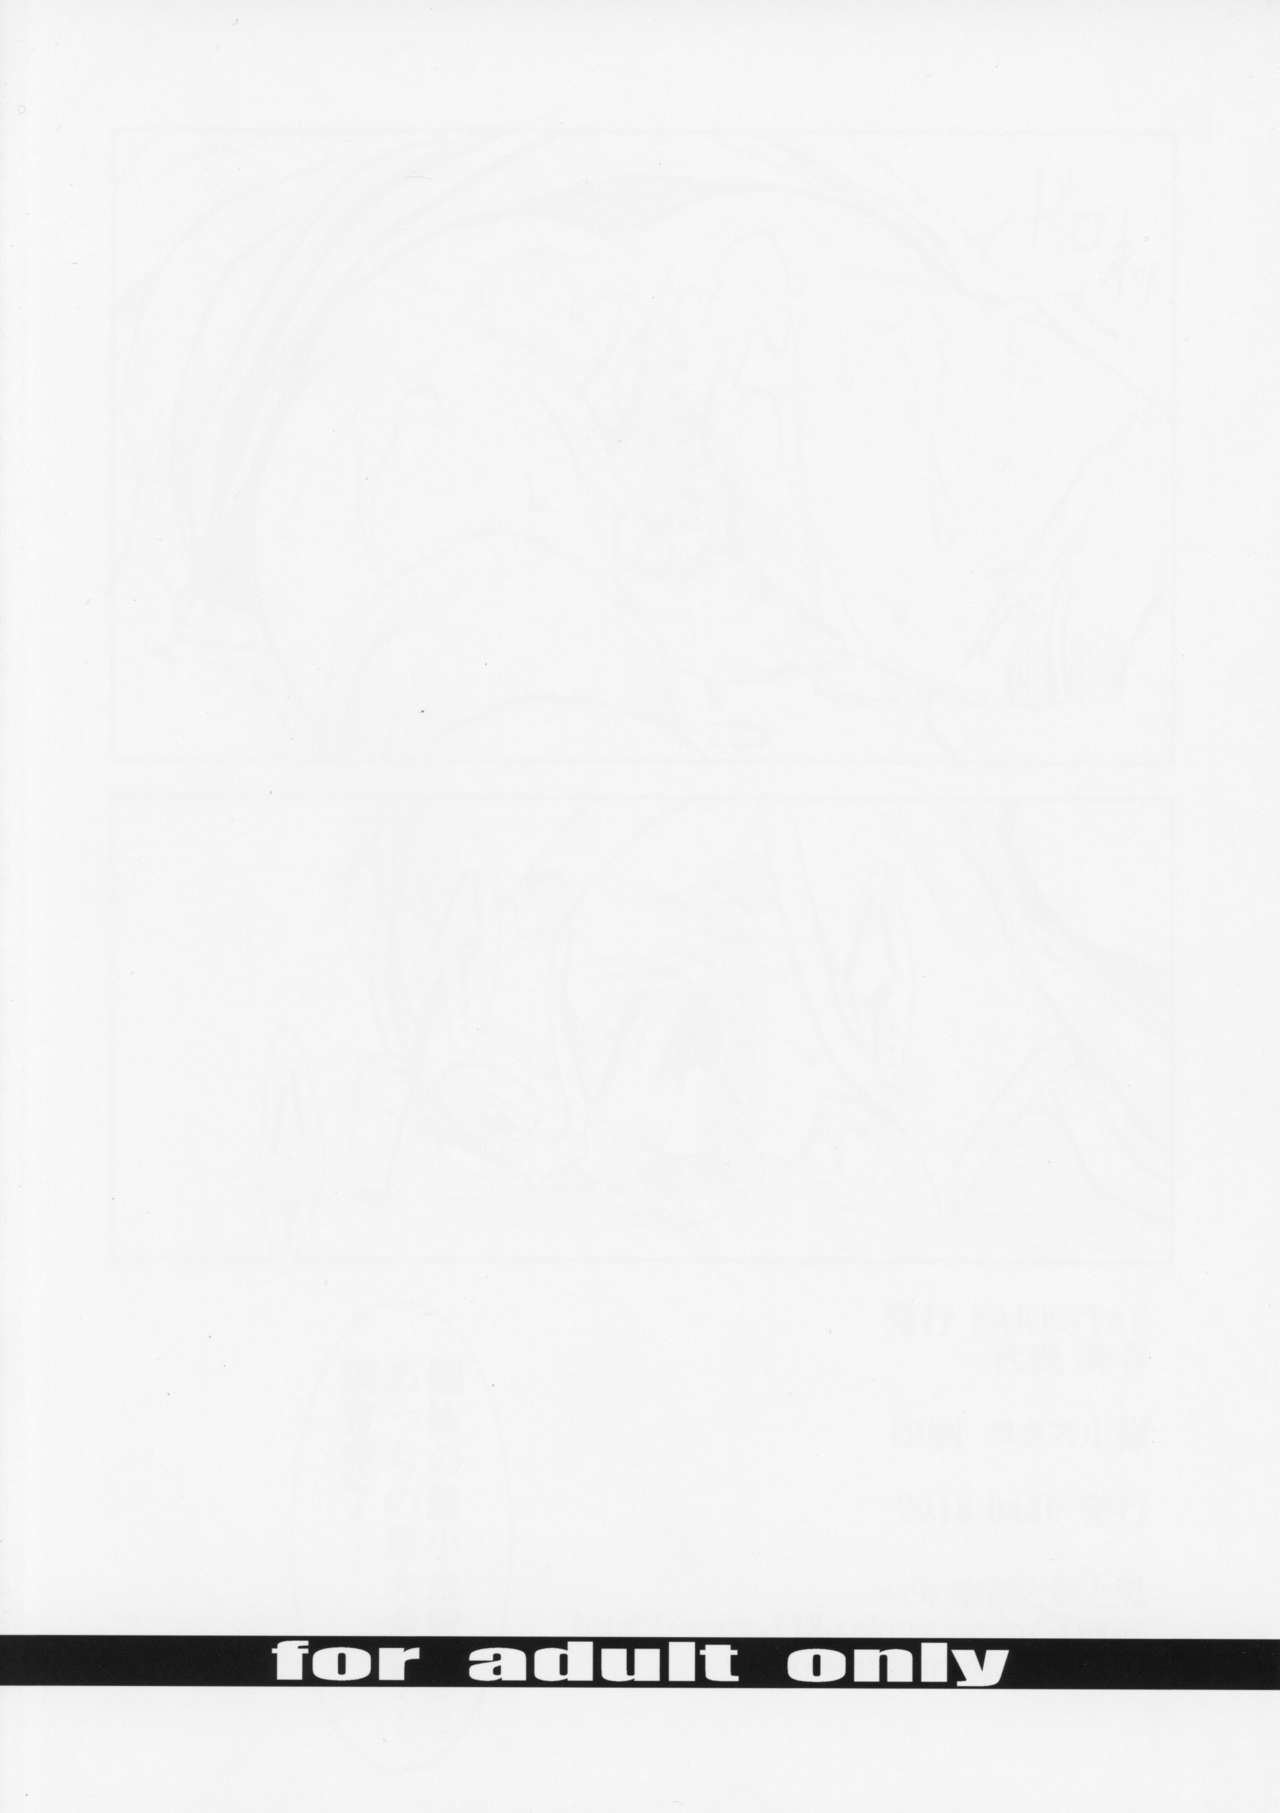 (COMIC1☆13) [FAKESTAR (美春)] UJ vol.2 (モンスターハンターワールド)